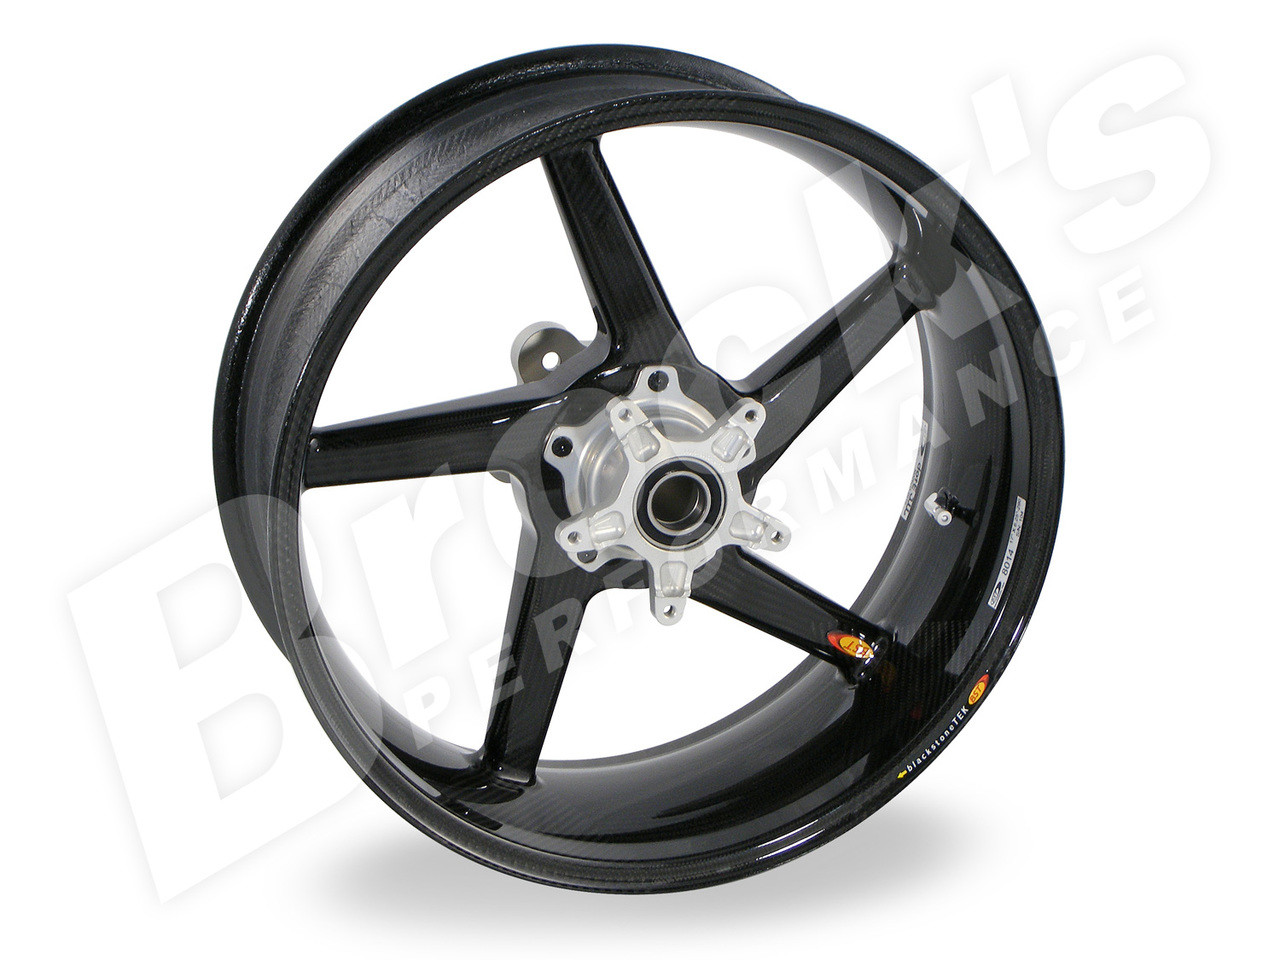 yamaha fz rear alloy wheel price